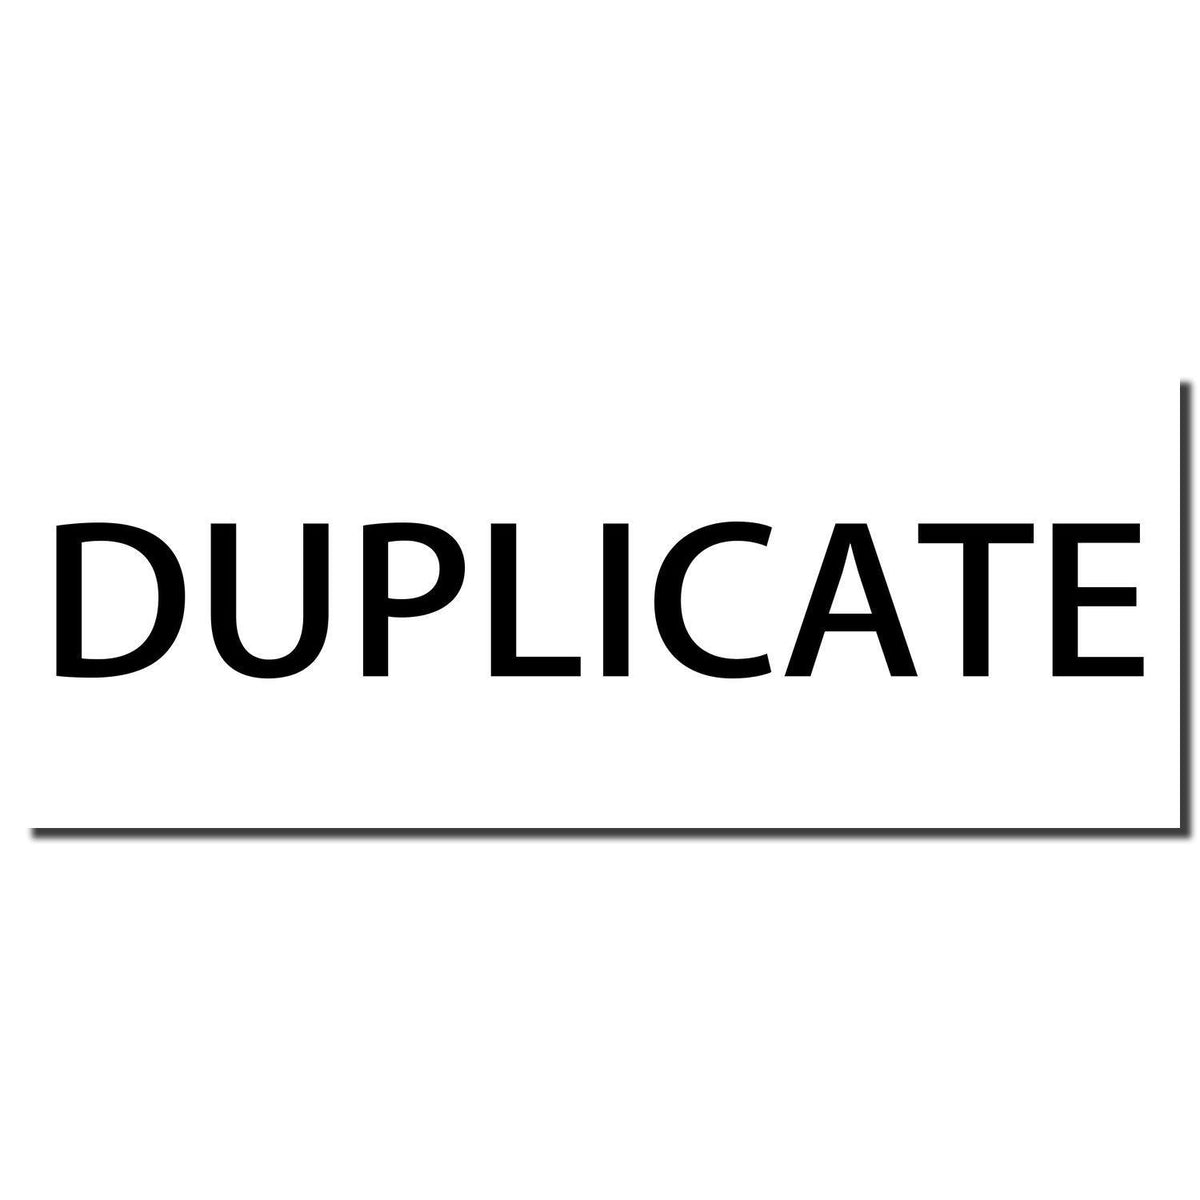 Enlarged Imprint Duplicate Rubber Stamp Sample